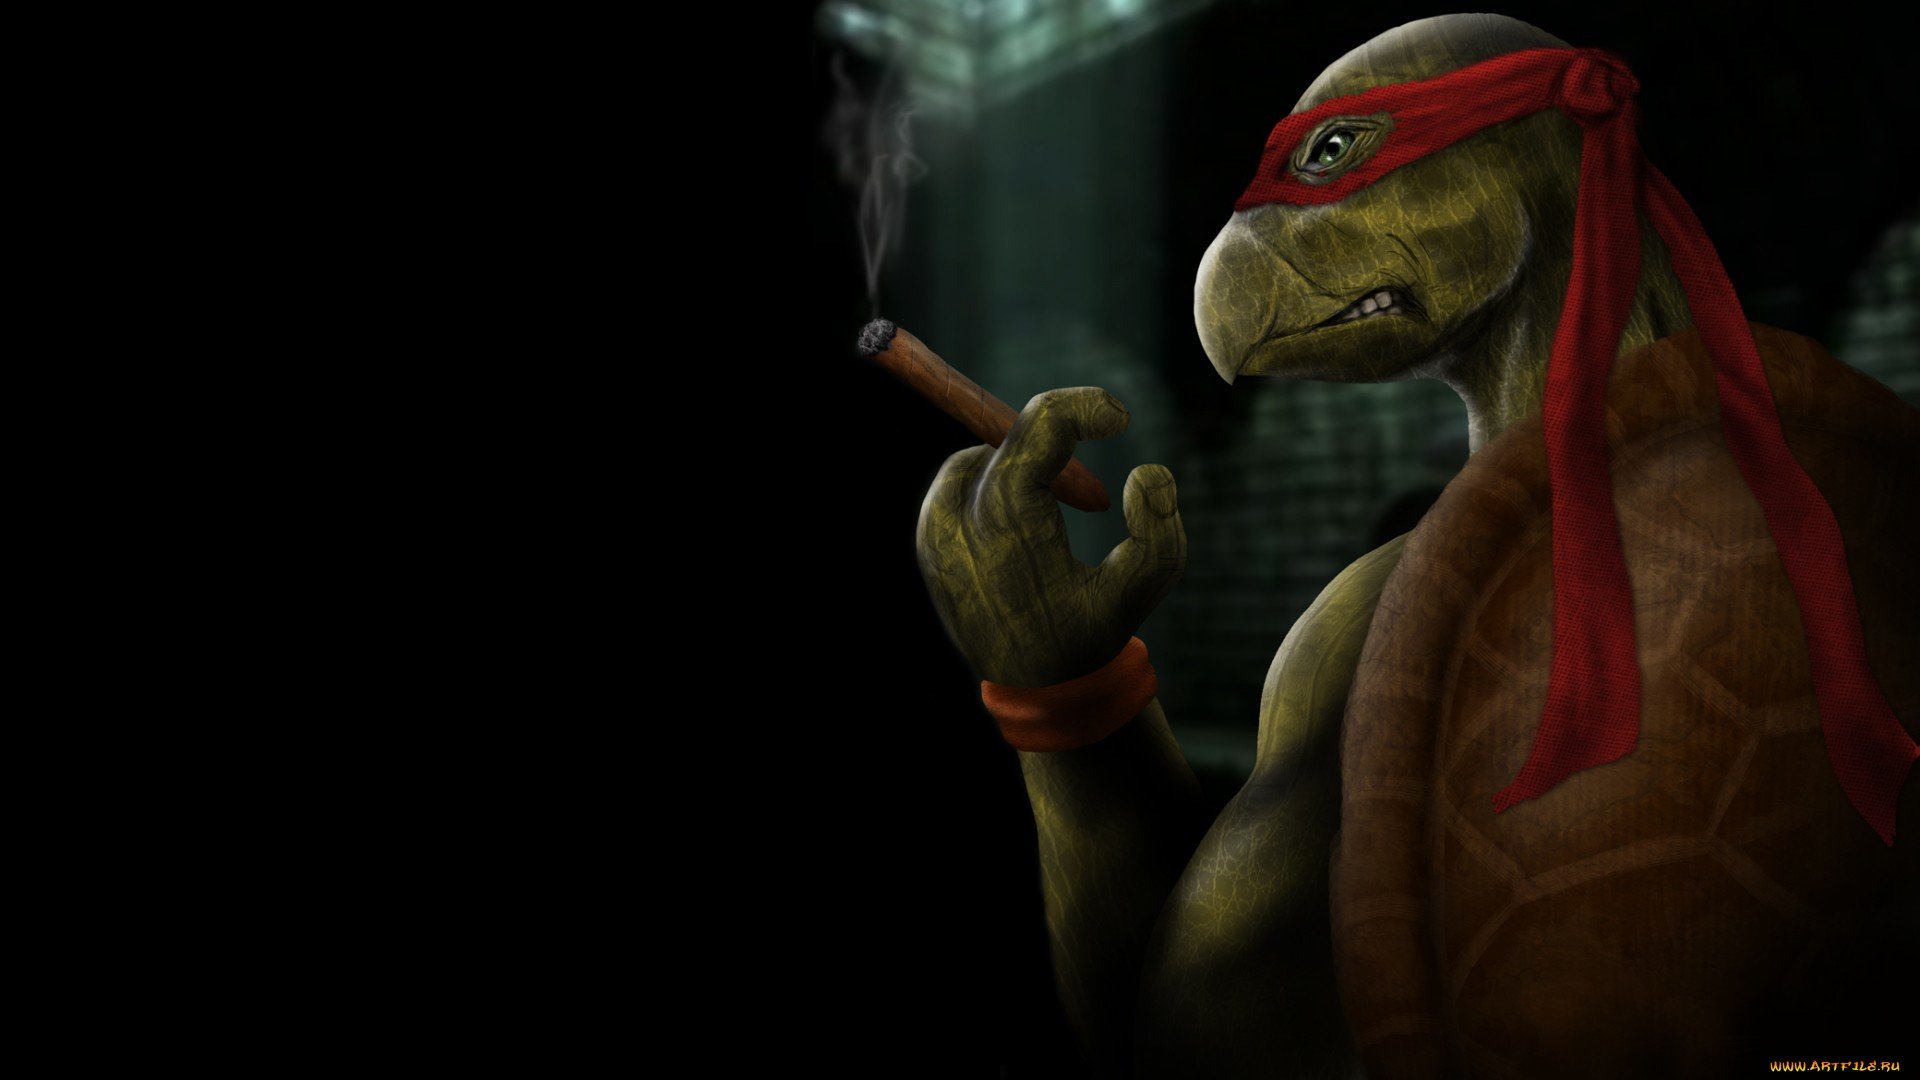 Best Teenage Mutant Ninja Turtles (TMNT) background ID:111304 for High Resolution full hd PC